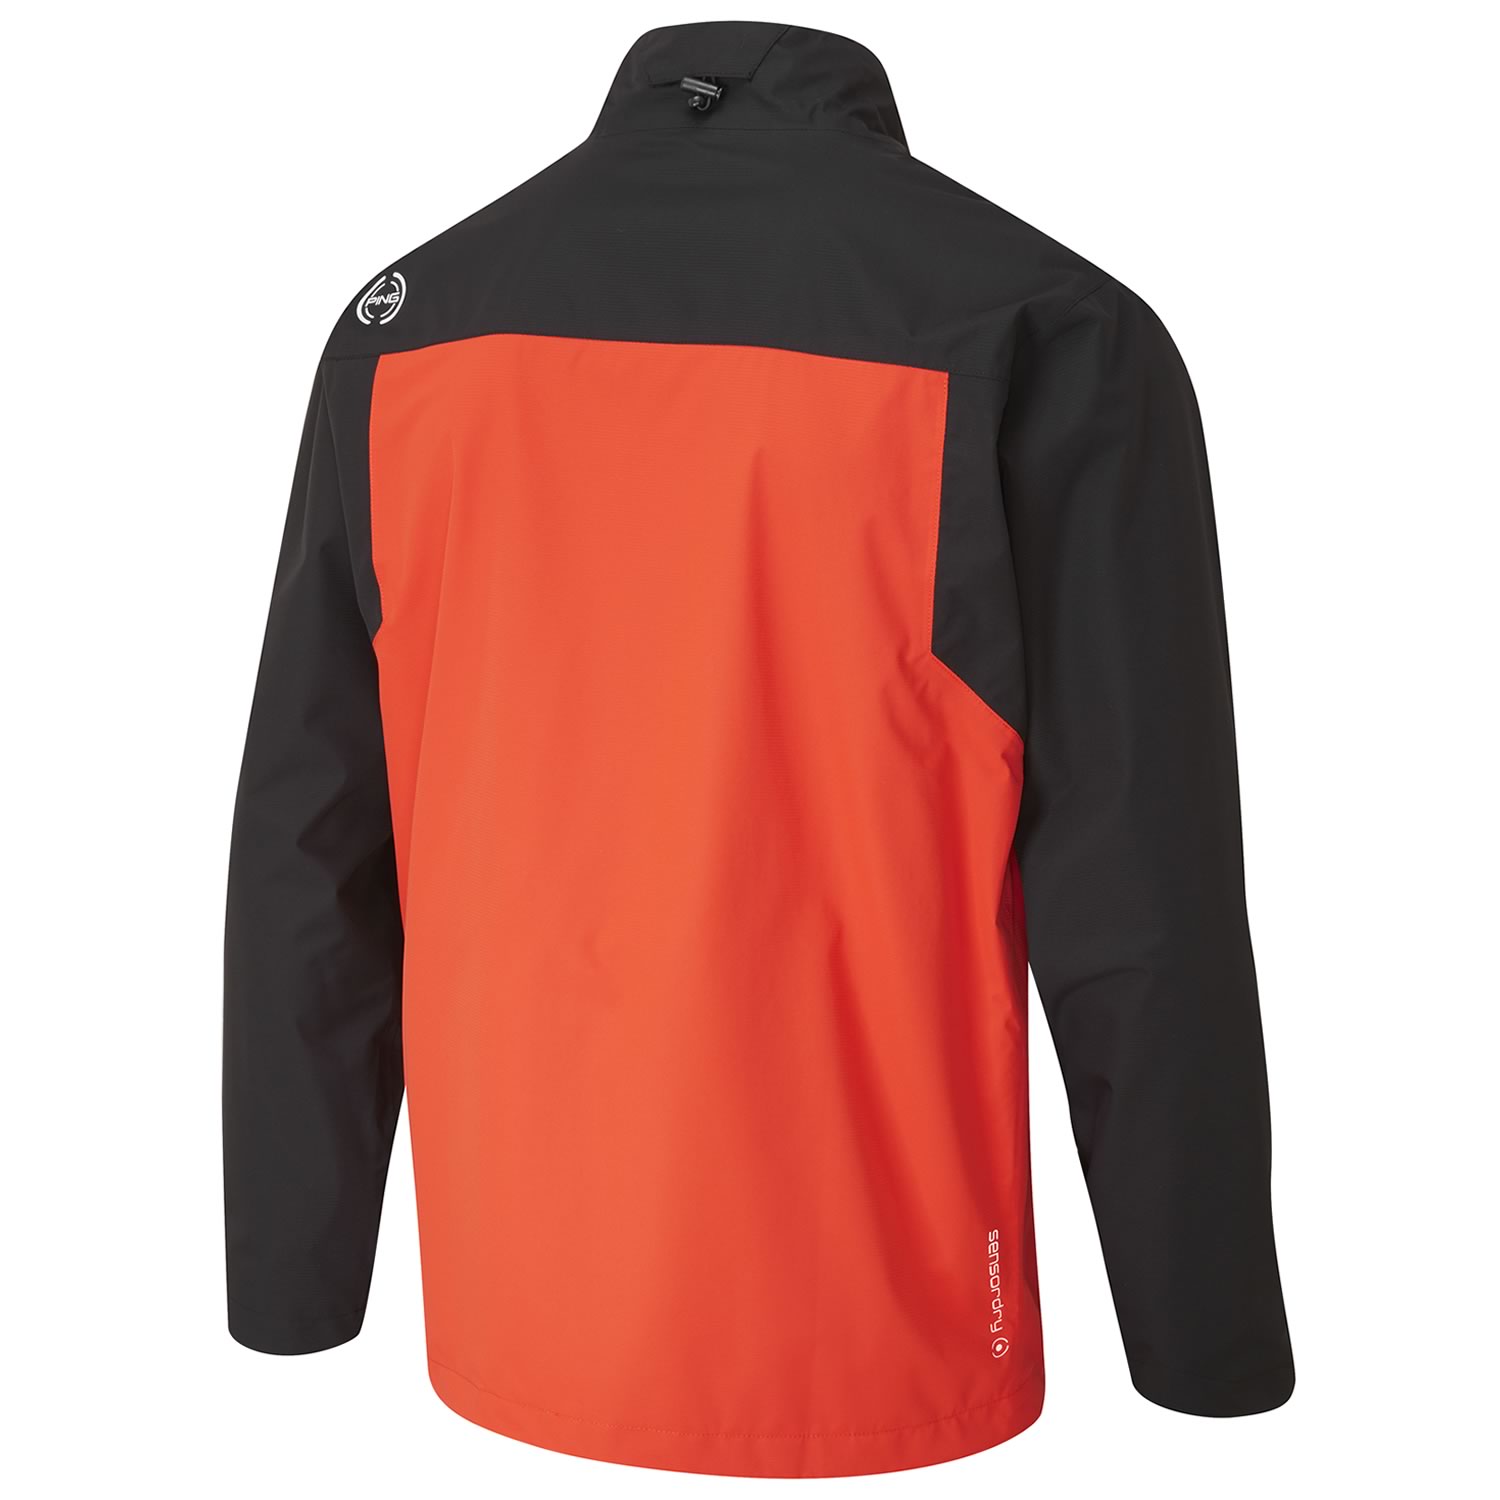 PING Sensordry Pro Waterproof Jacket Fiesta/Black | Scottsdale Golf